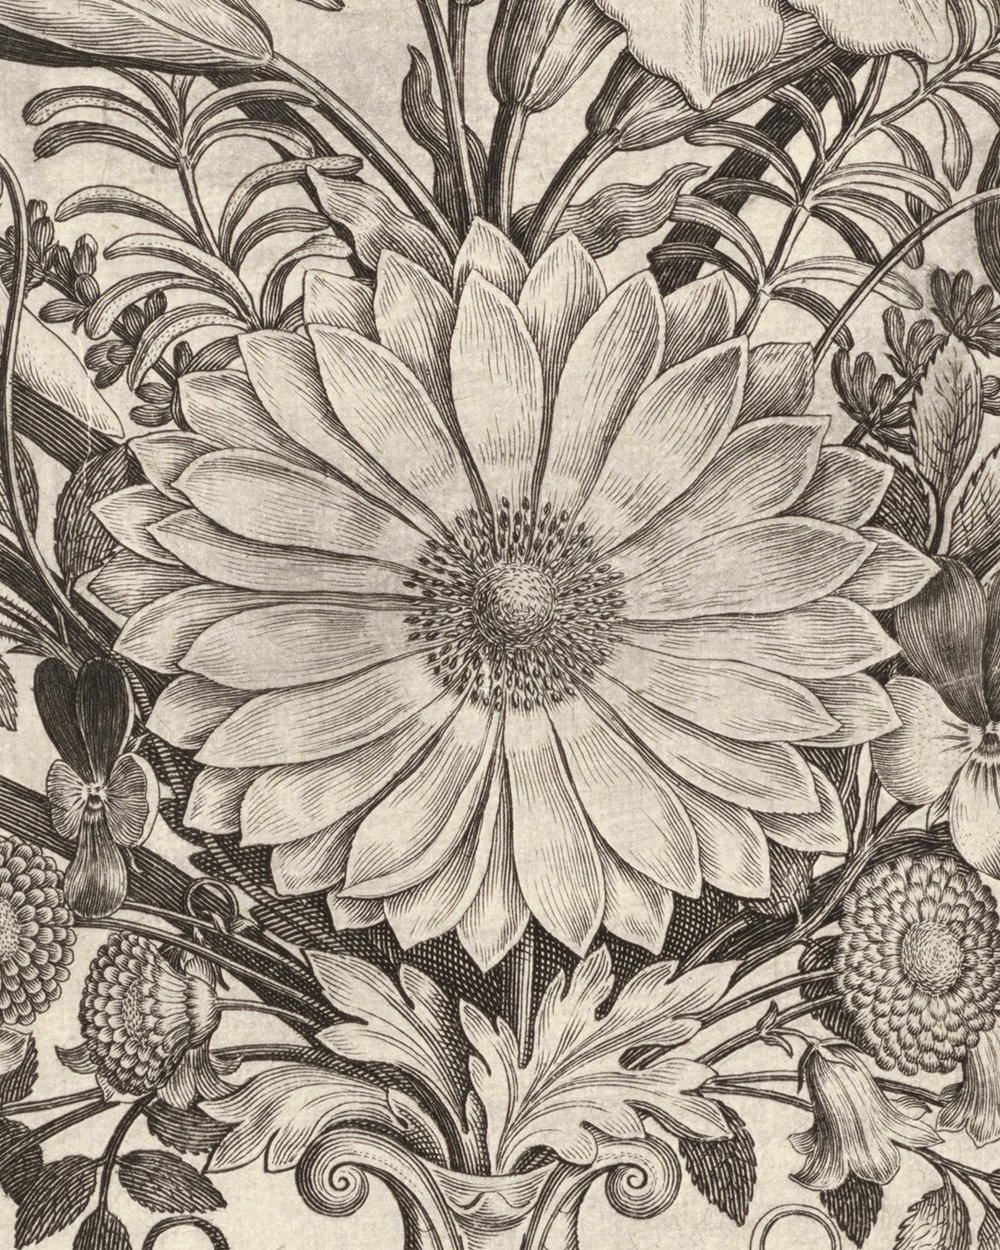 "Polyptoton de Flore (The Variance of Flowers)" (1600)